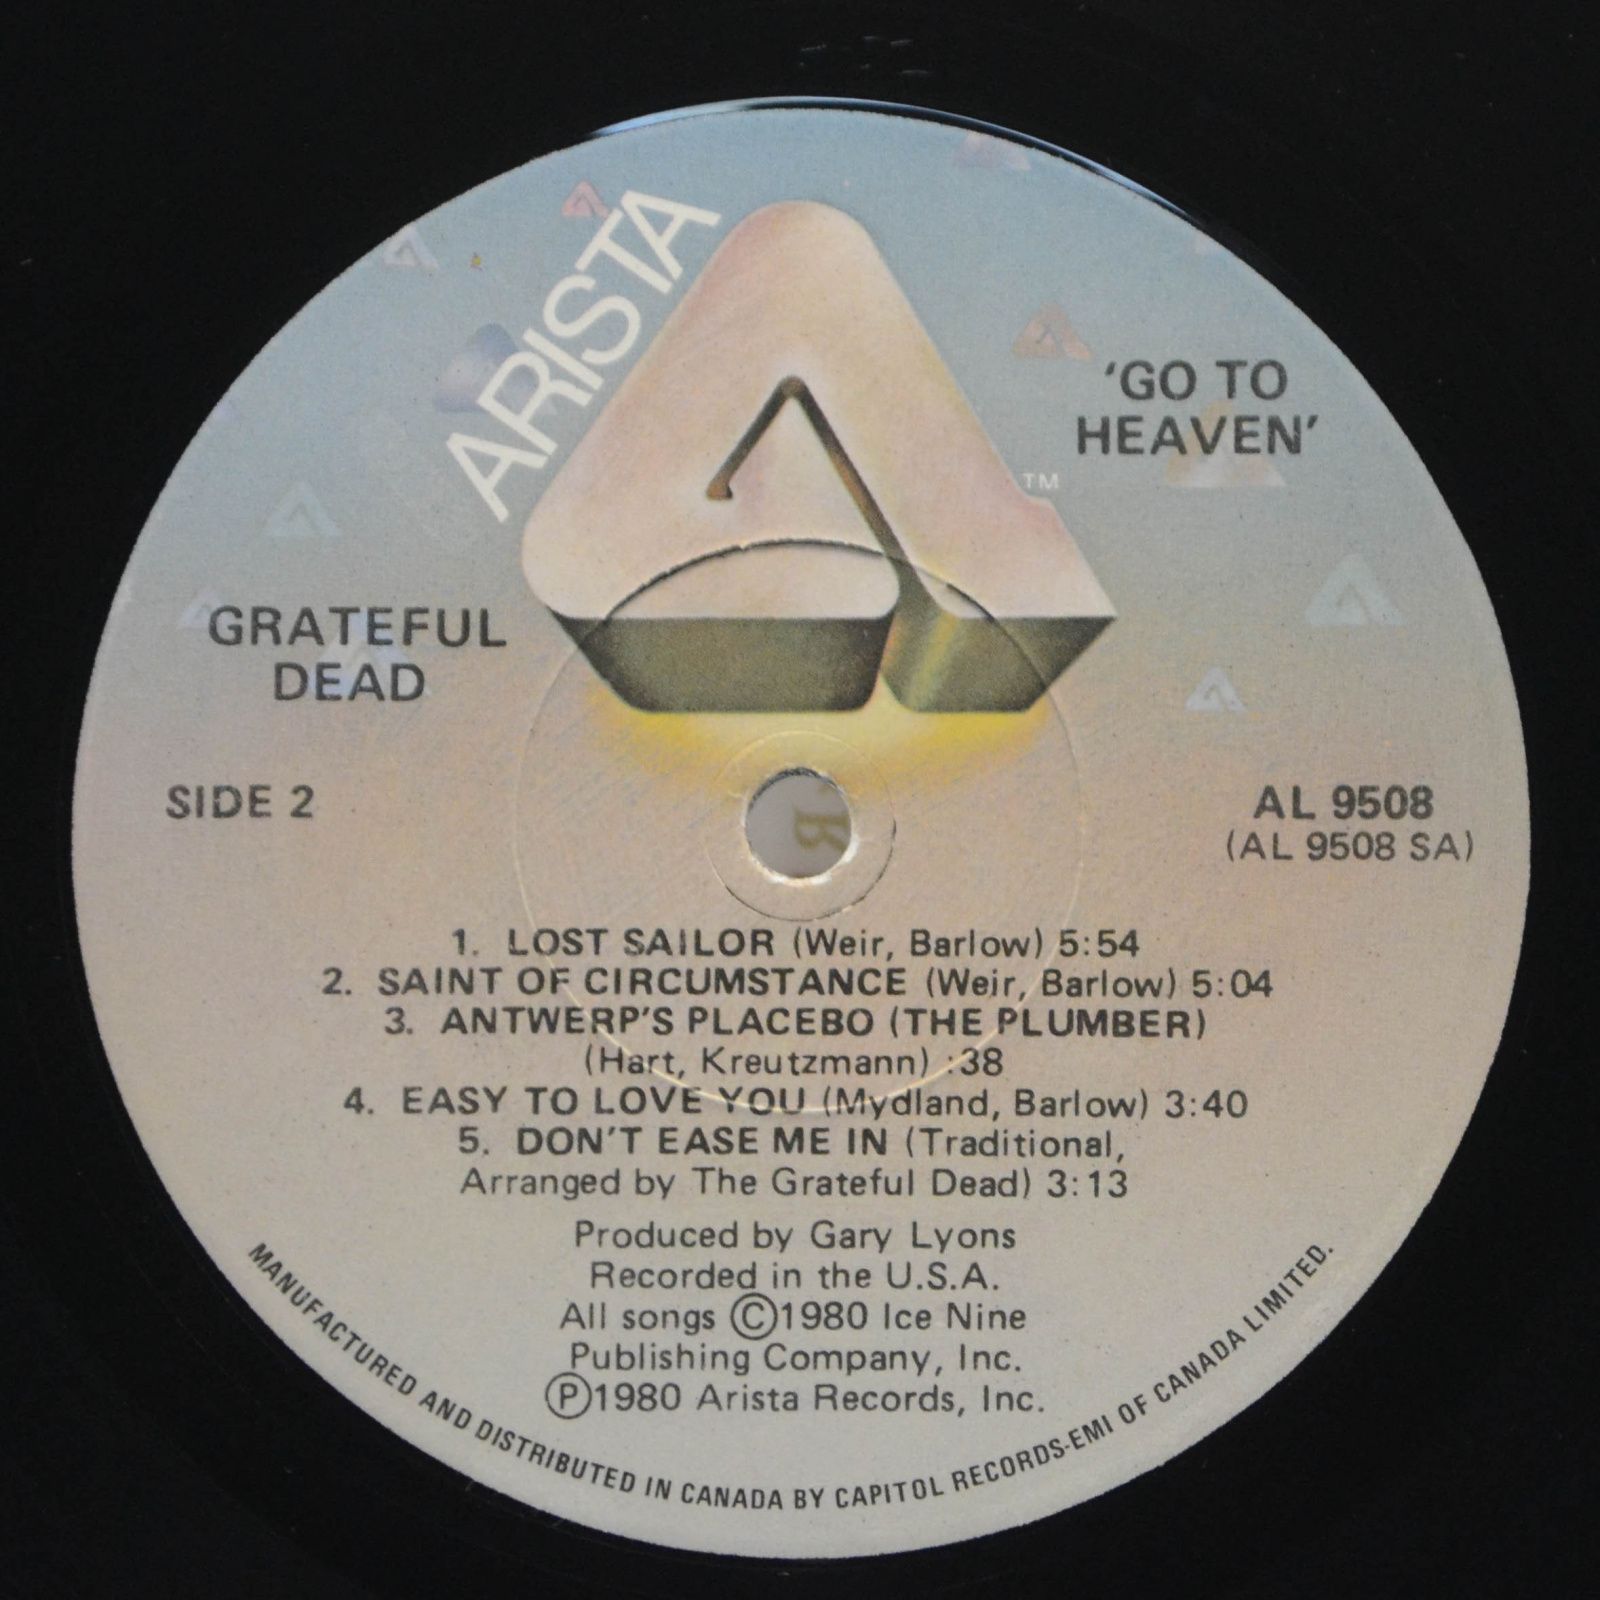 Grateful Dead — Go To Heaven, 1980